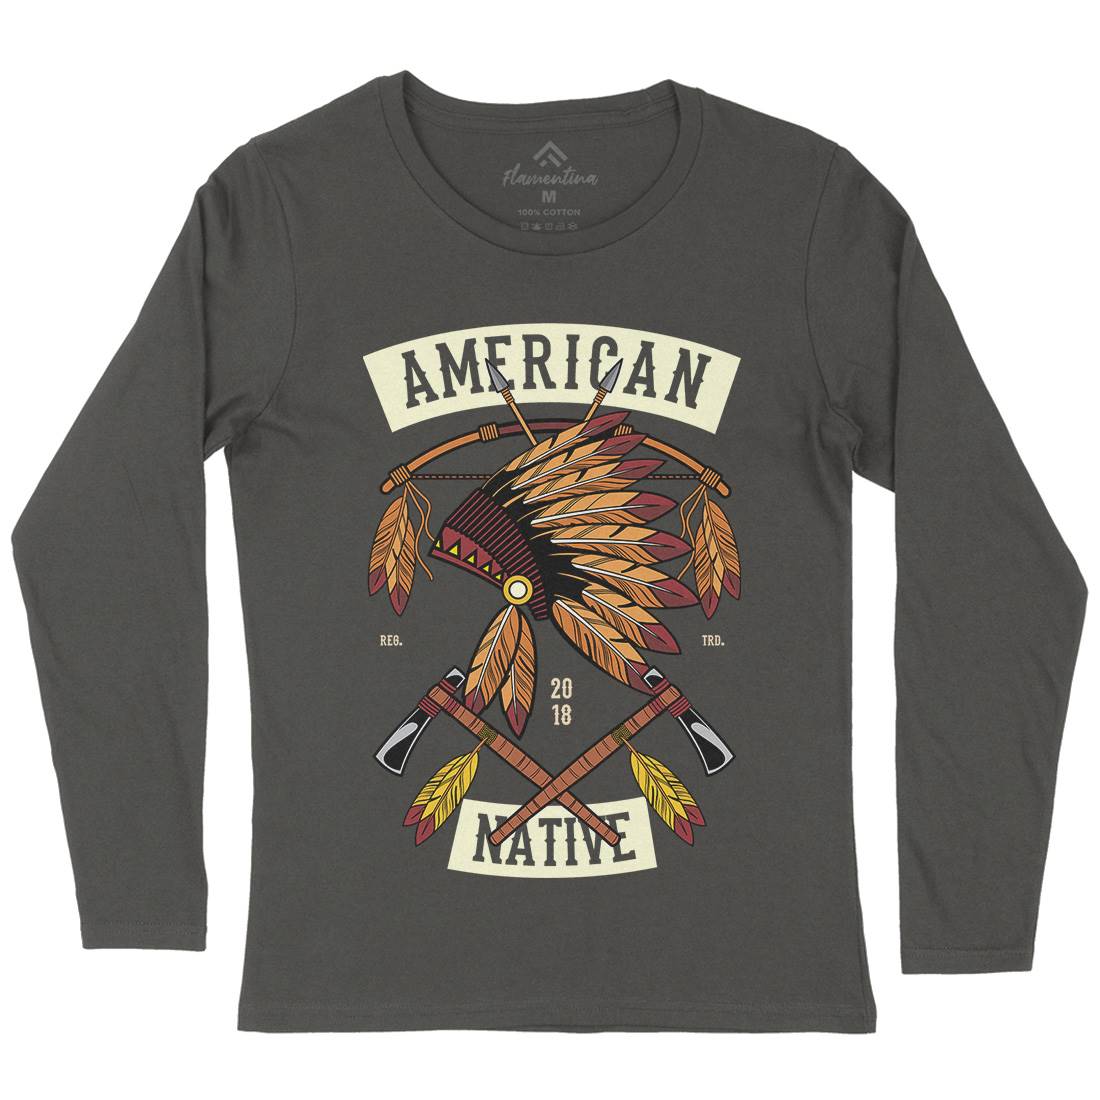 American Native Womens Long Sleeve T-Shirt American C303